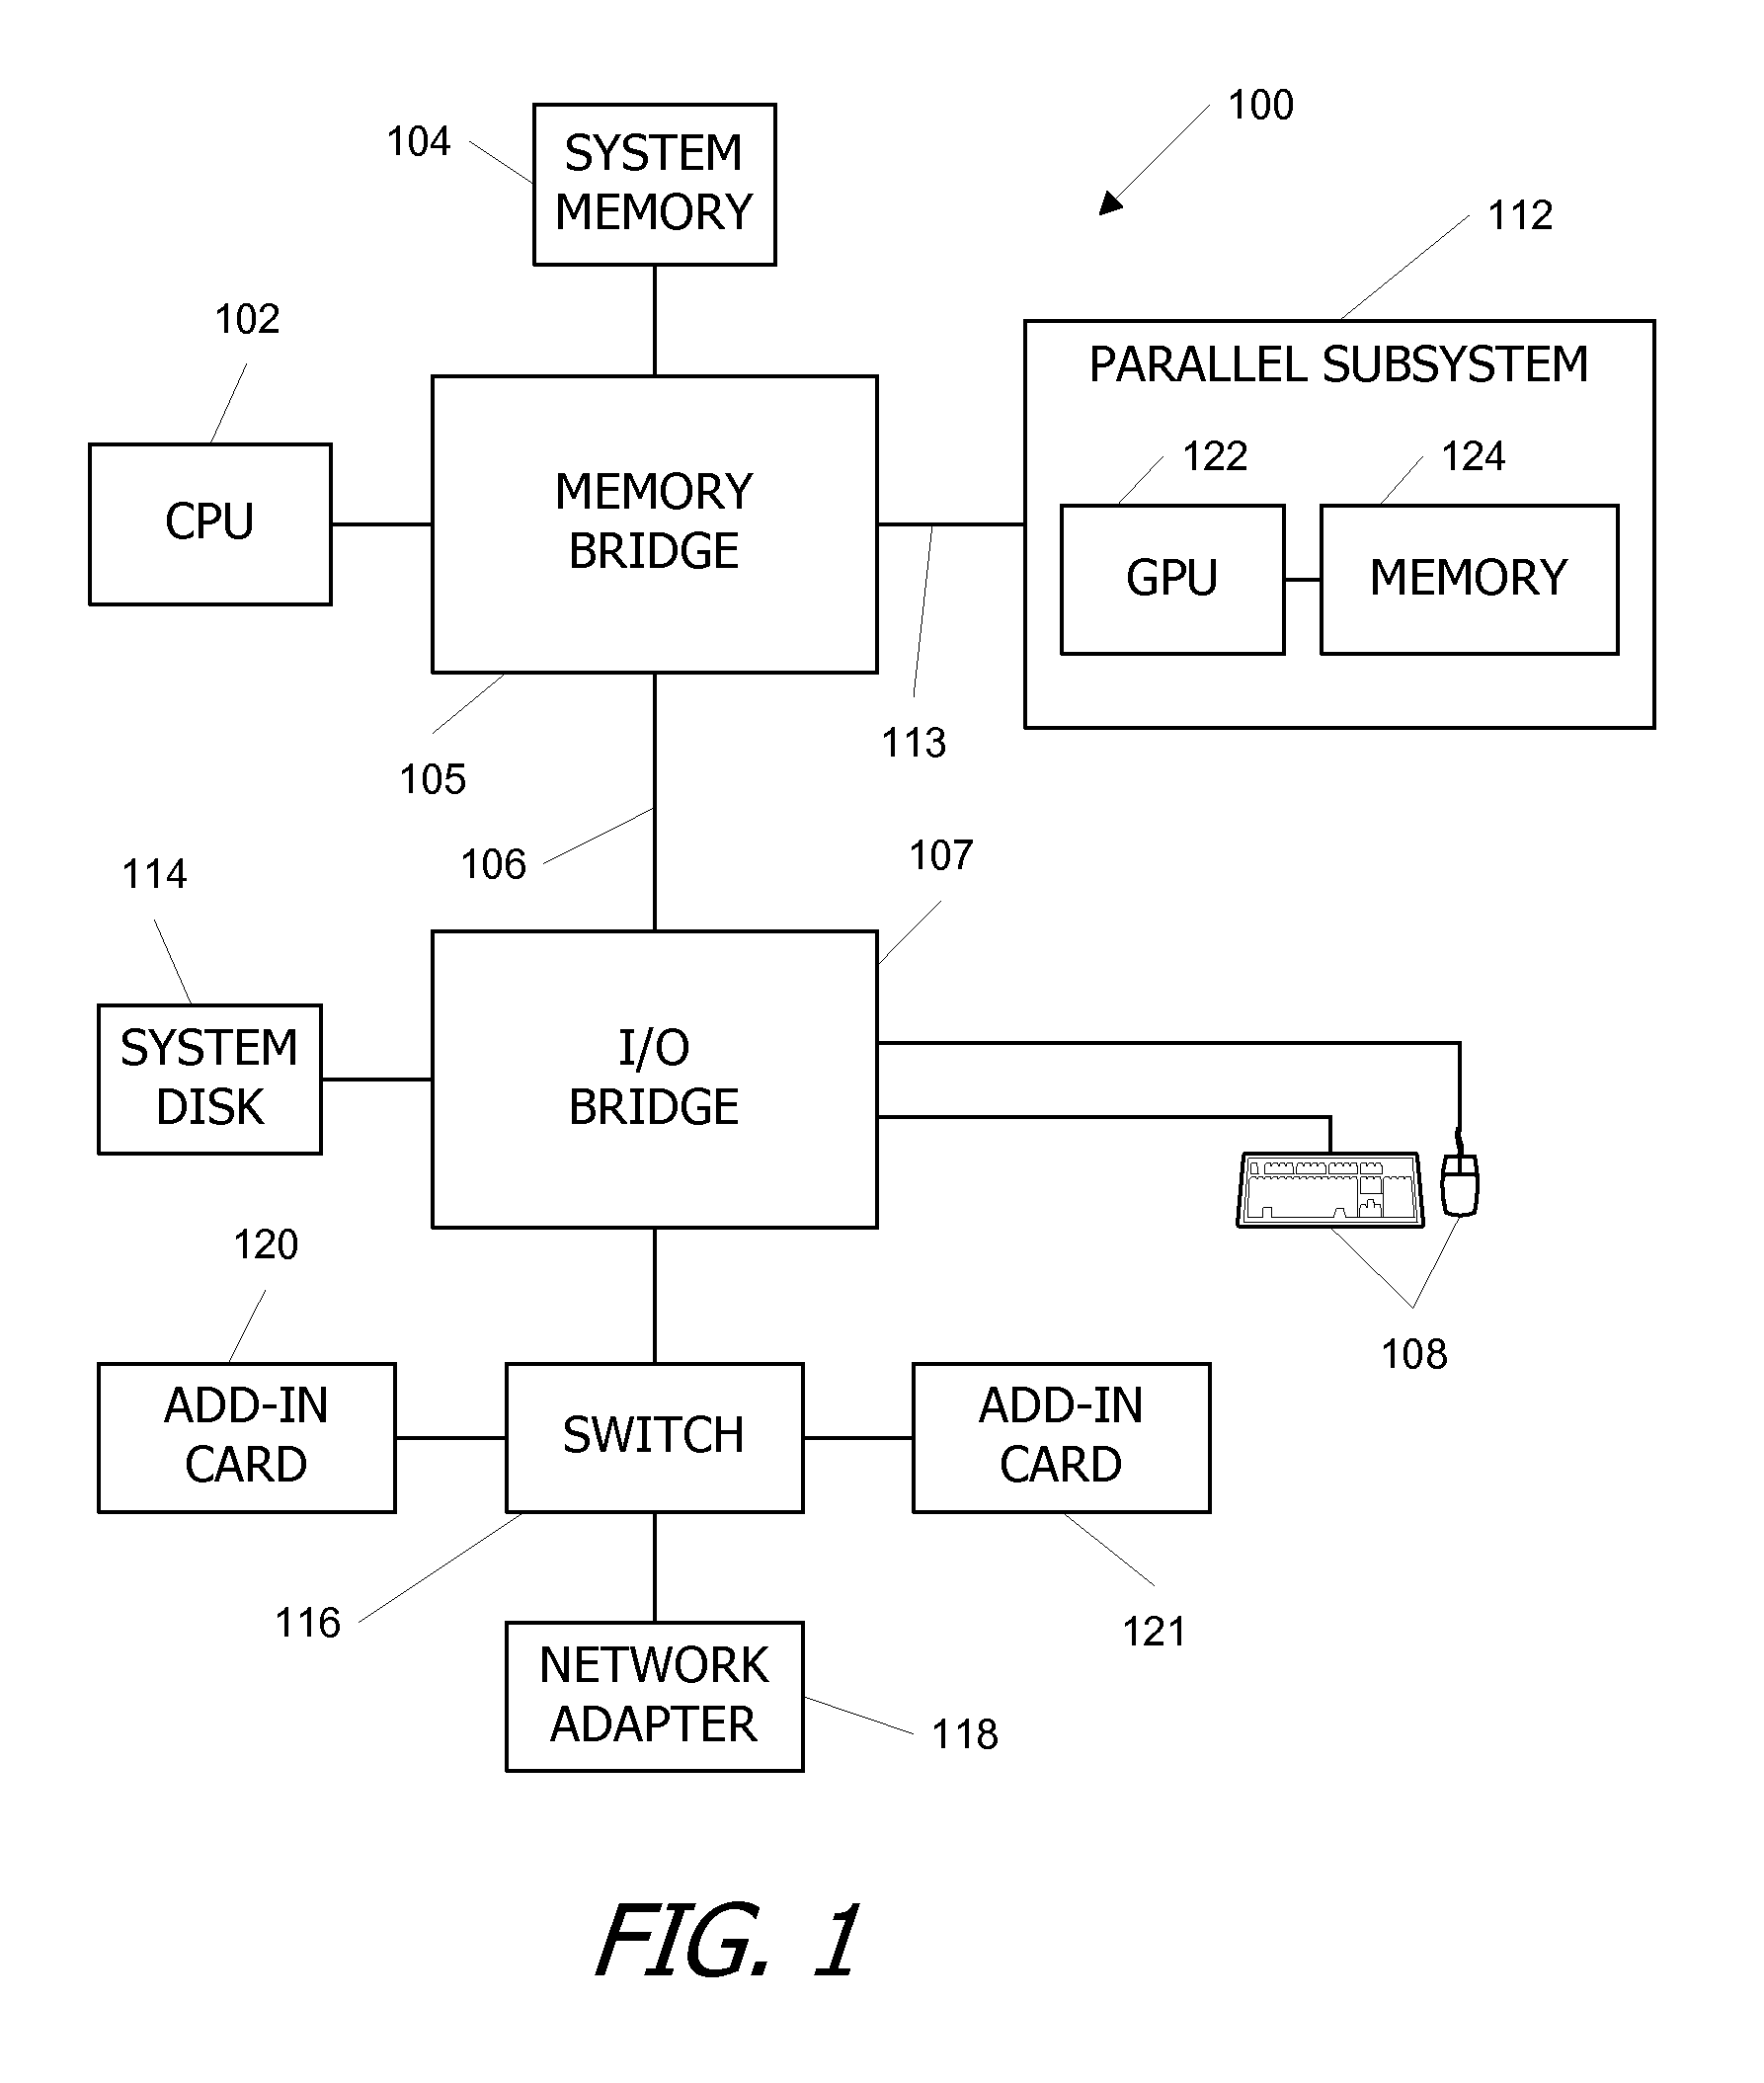 Atomic memory operators in a parallel processor